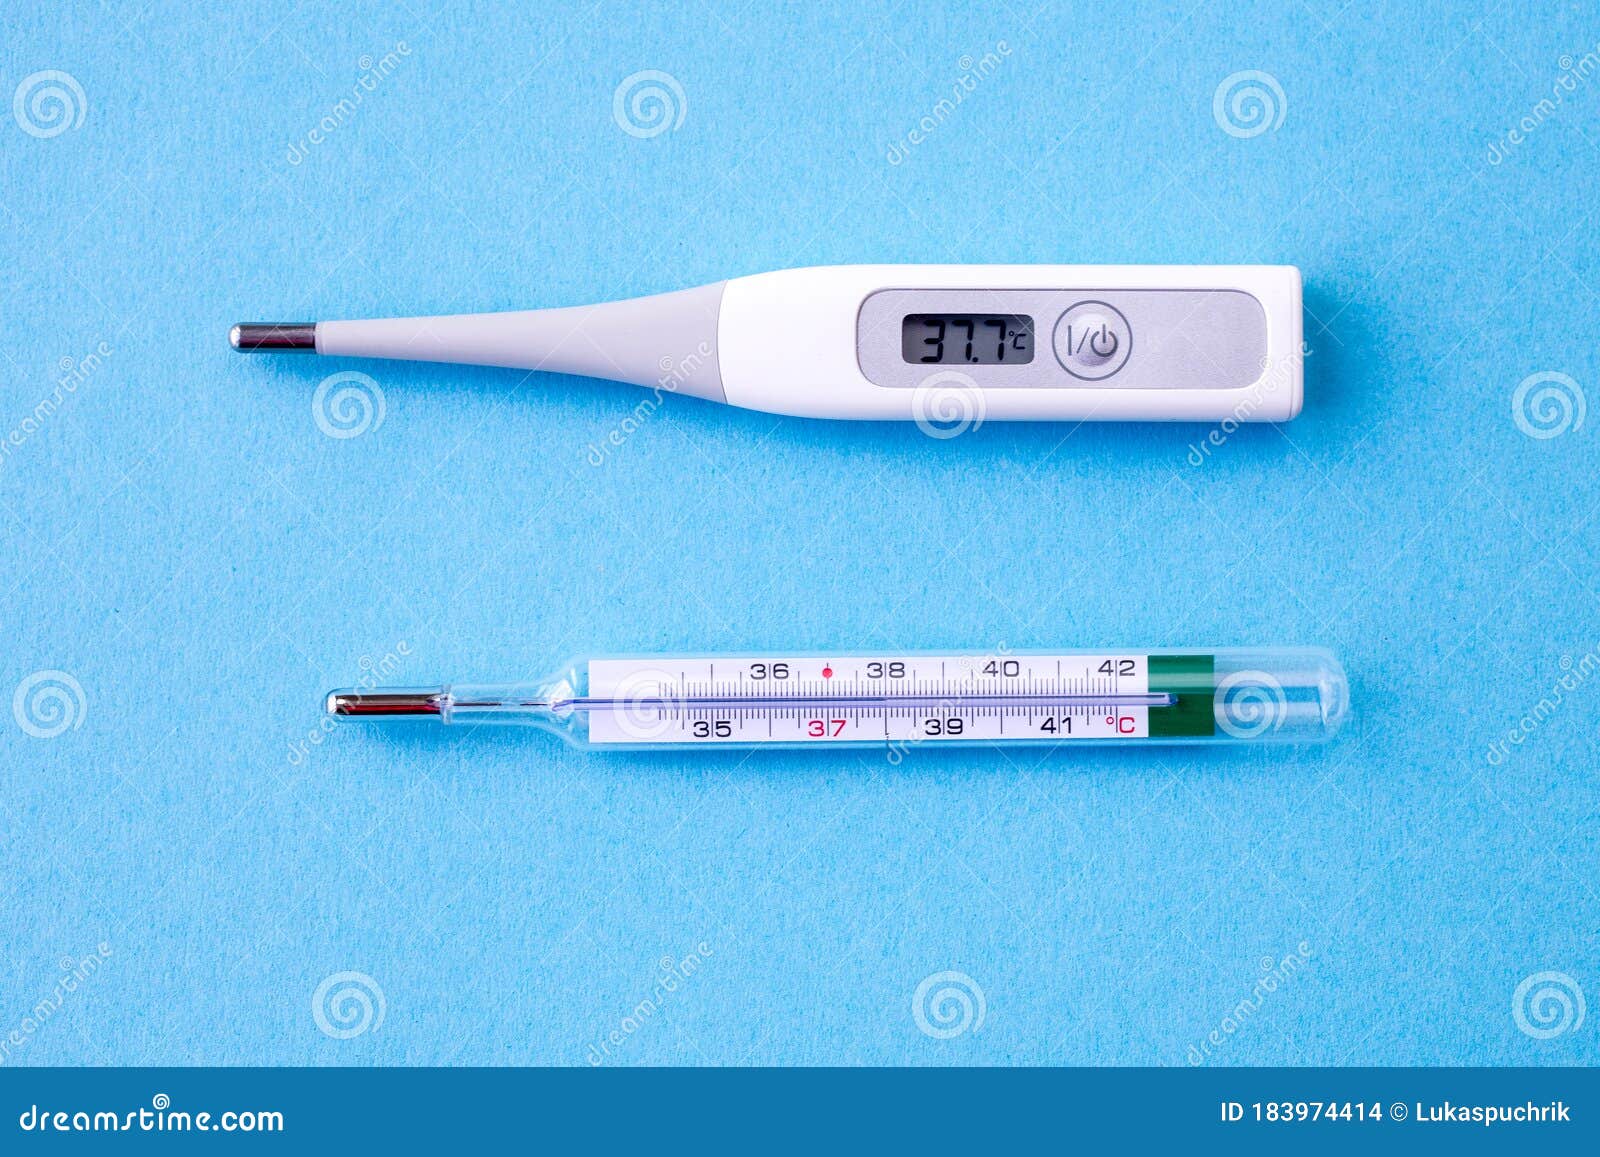 driehoek Toegangsprijs Tweet Vergelijking Van Digitale En Analoge Thermometer Op Blauwe Achtergrond  Stock Foto - Image of hitte, griep: 183974414